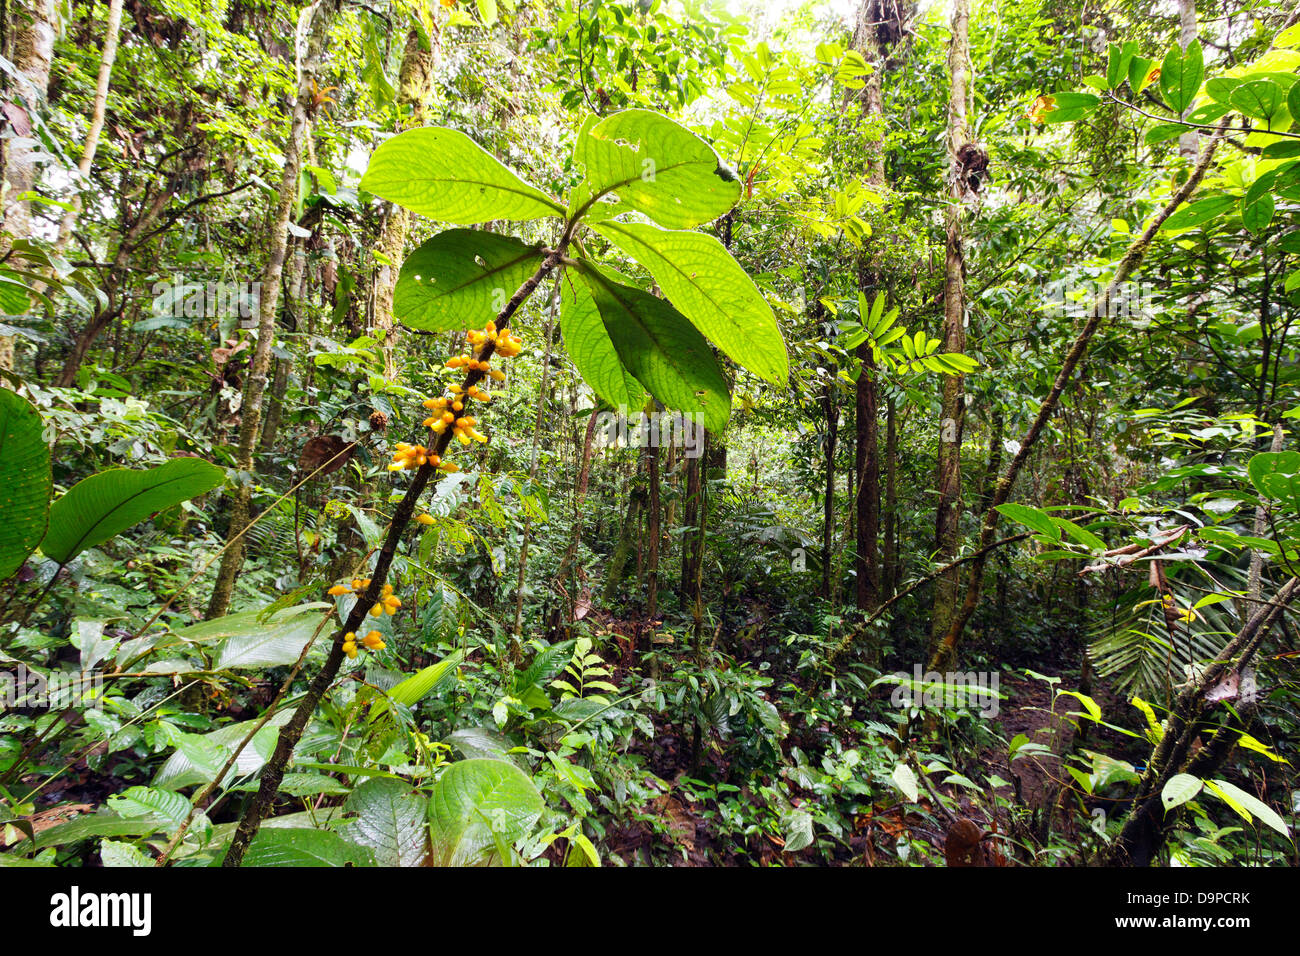 Flowering plant in the rainforest understory, Ecuador Stock Photo